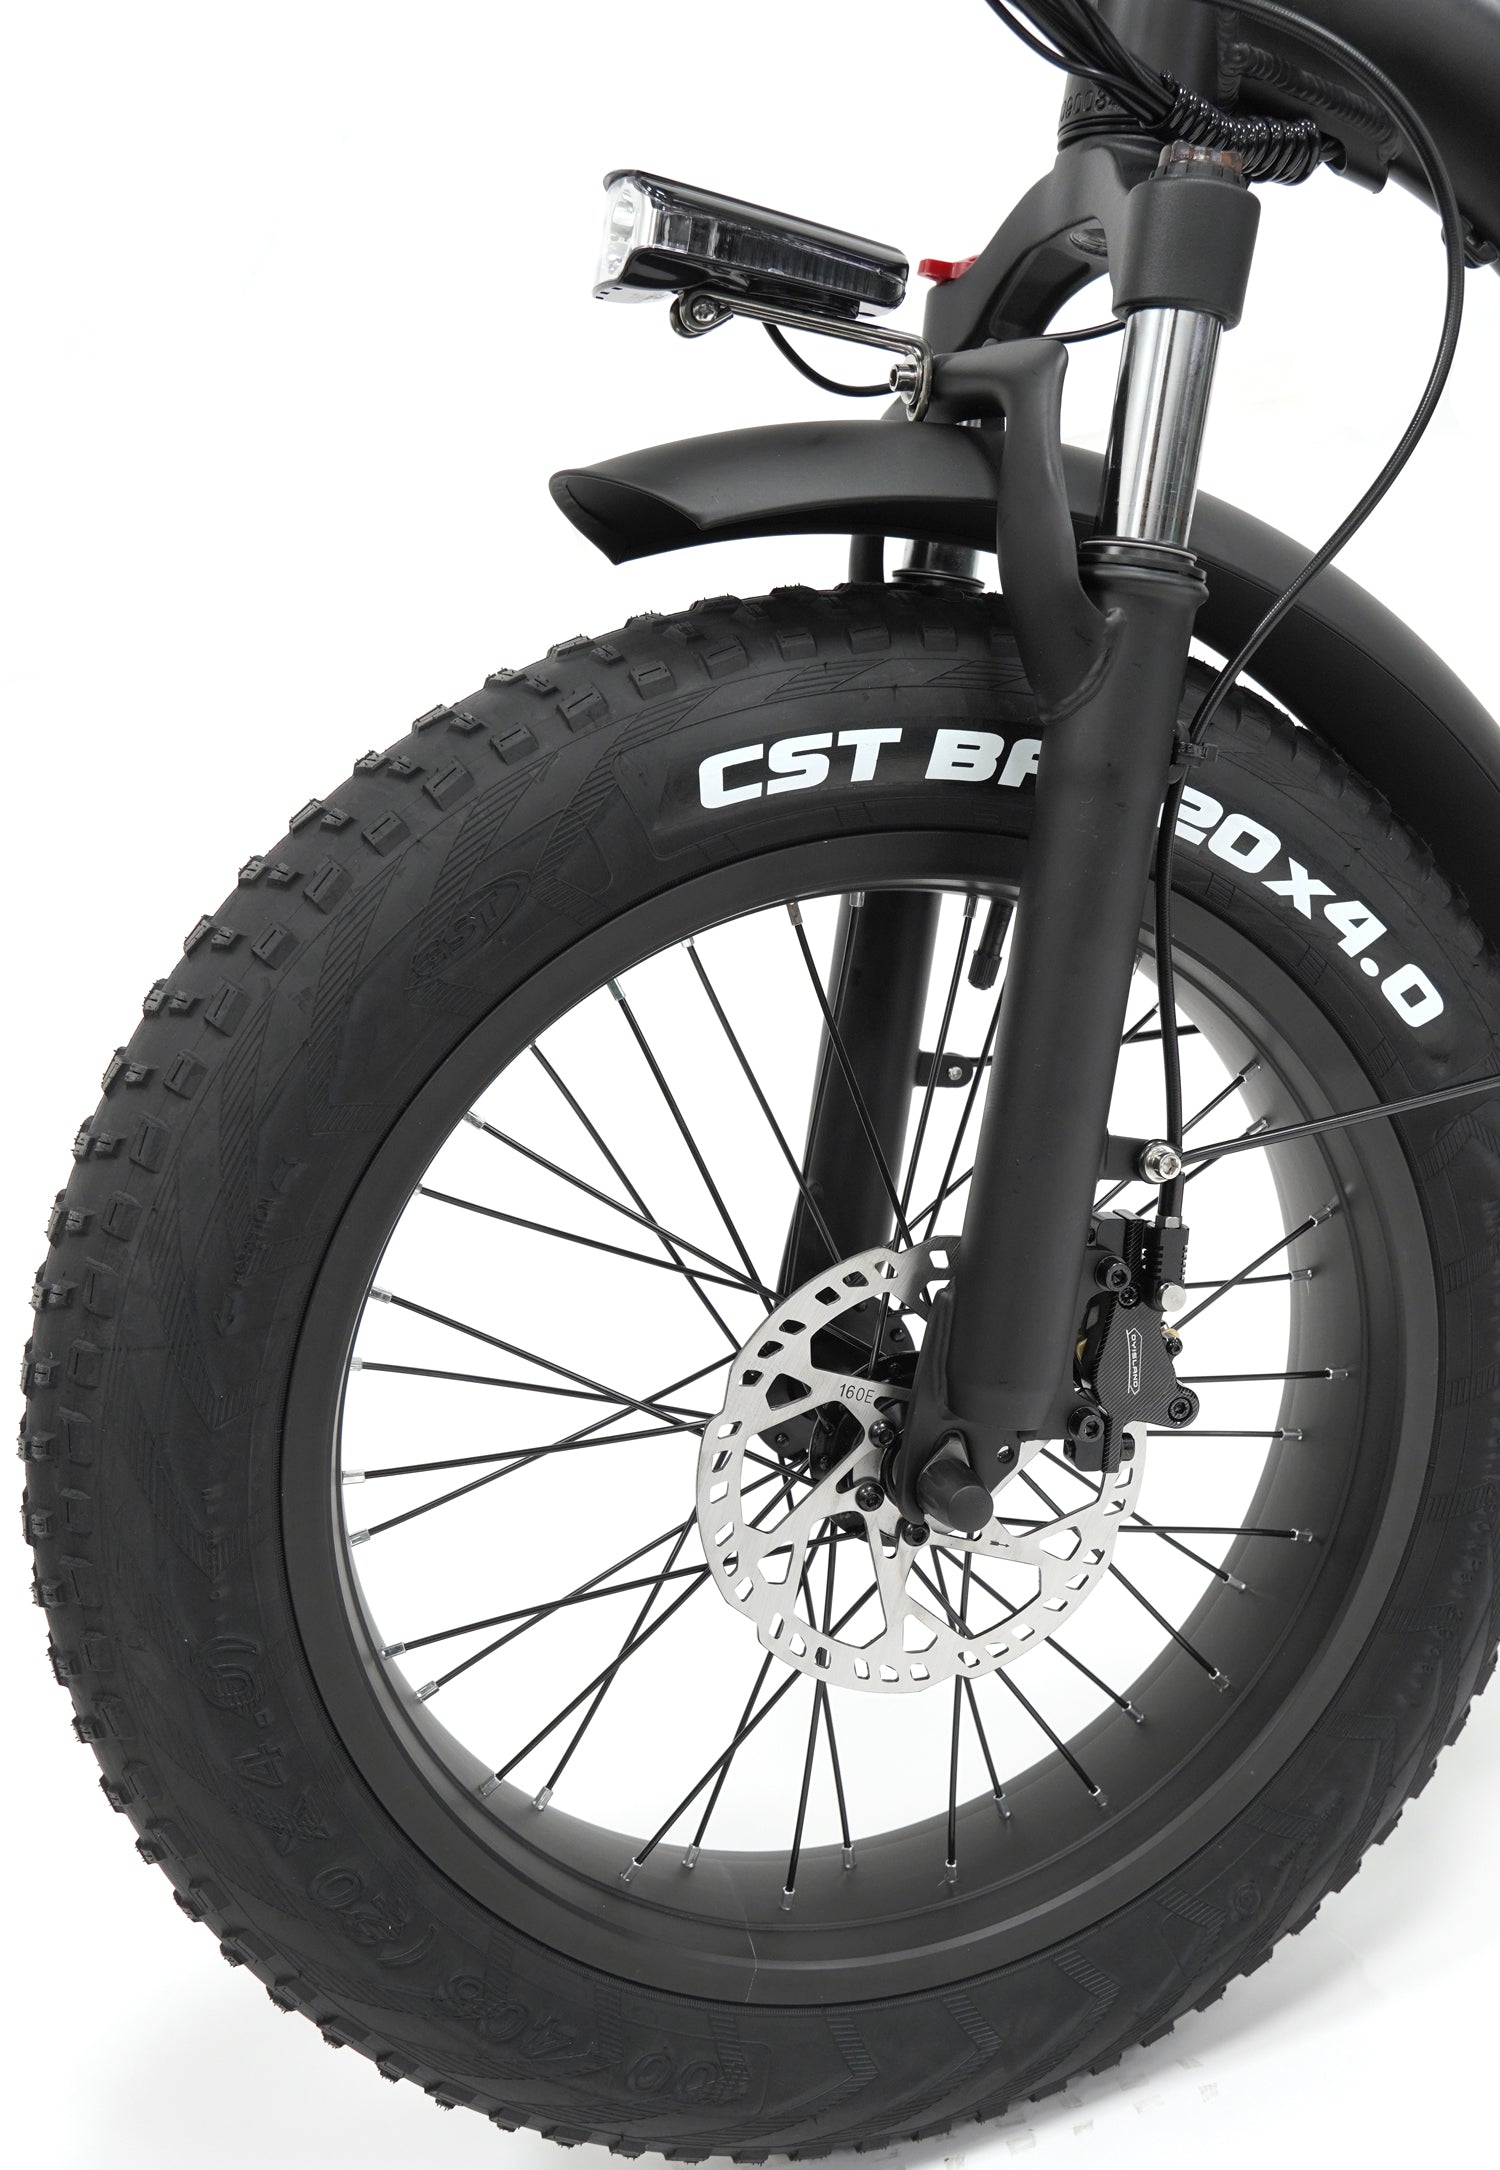 HANEVEAR Y20-Plus 20" Fat Tire Foldable Electric Bike 48V/24AH